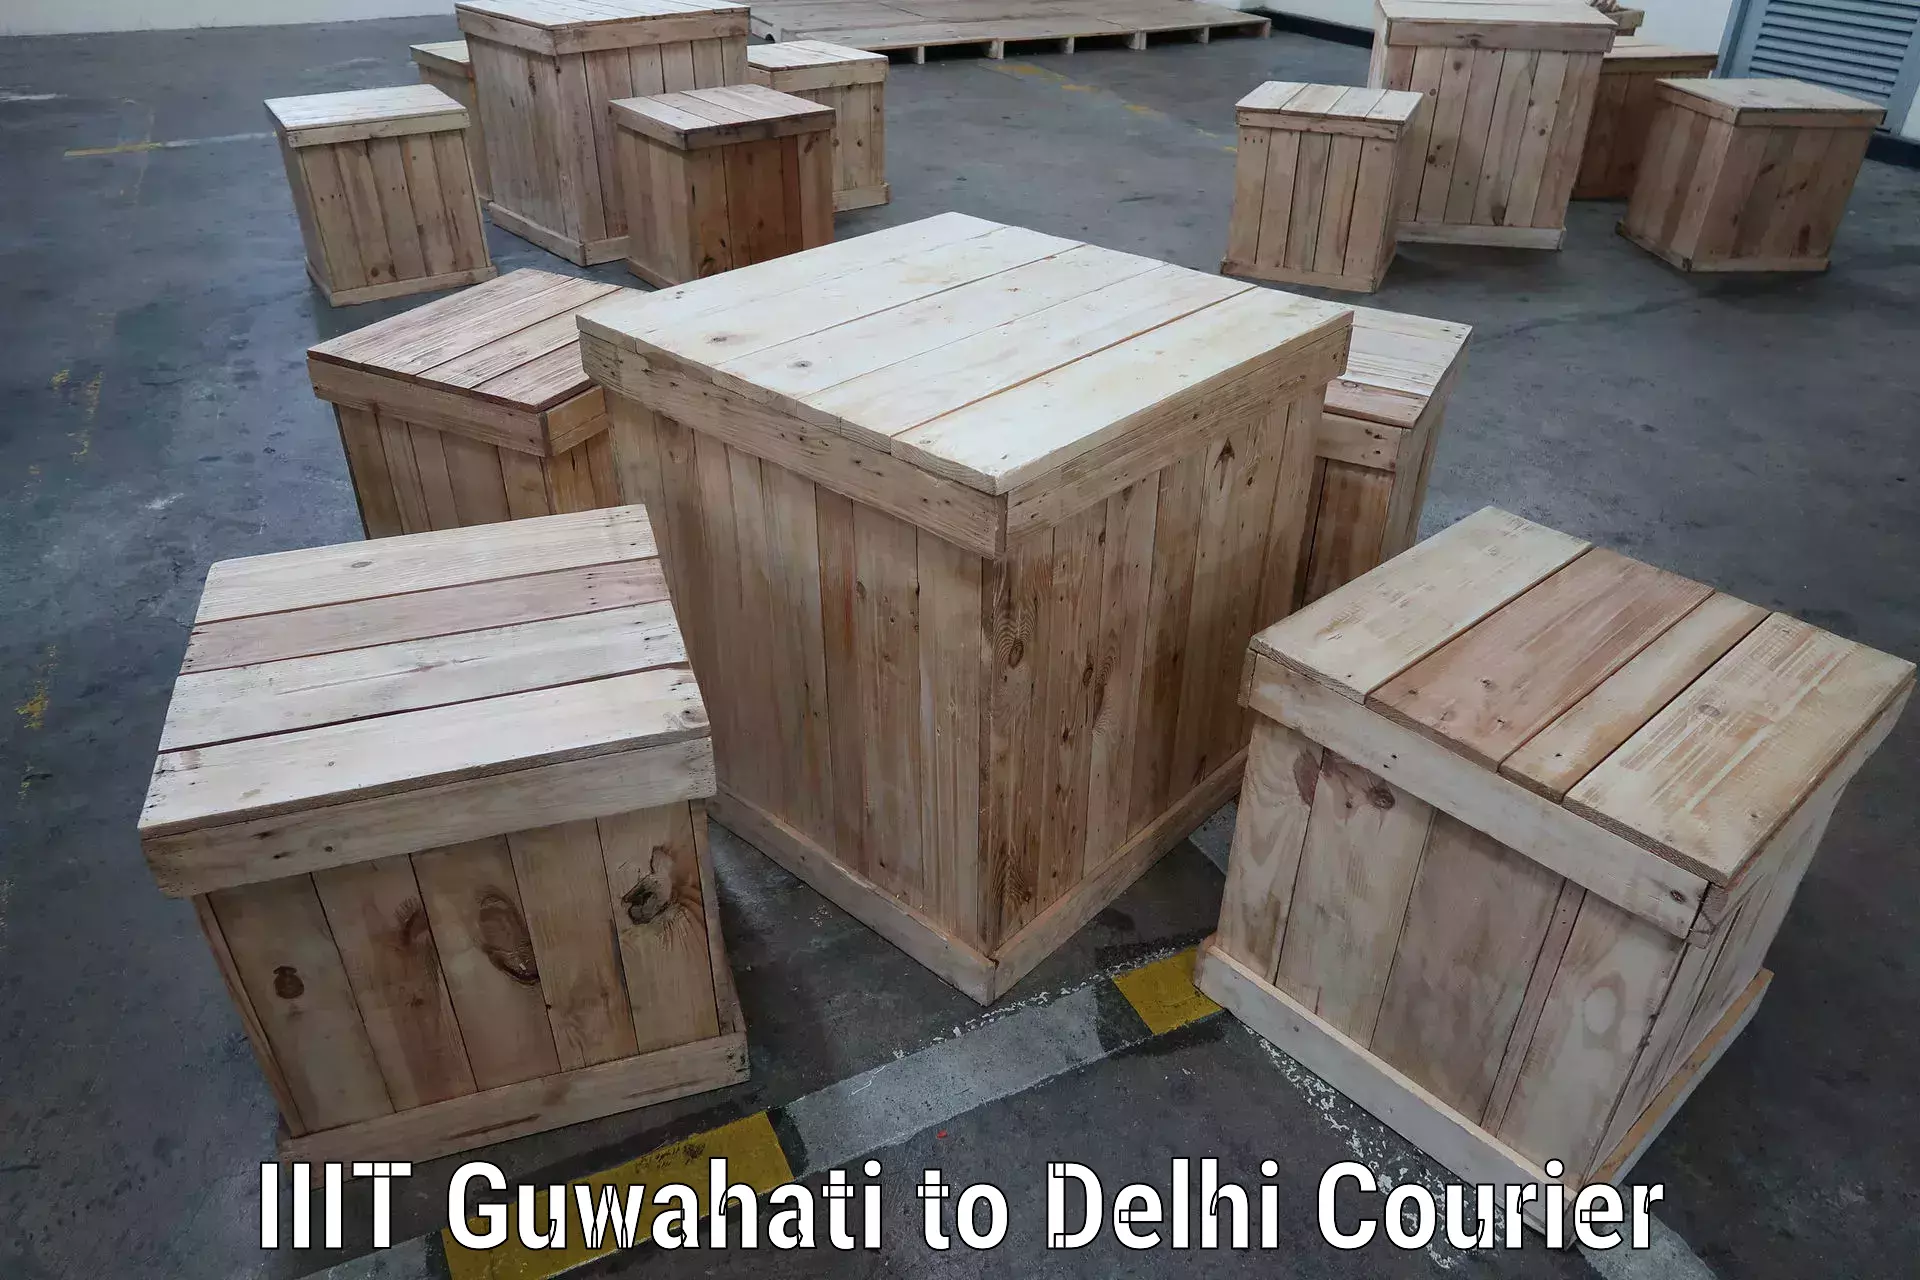 Seamless shipping experience in IIIT Guwahati to NIT Delhi